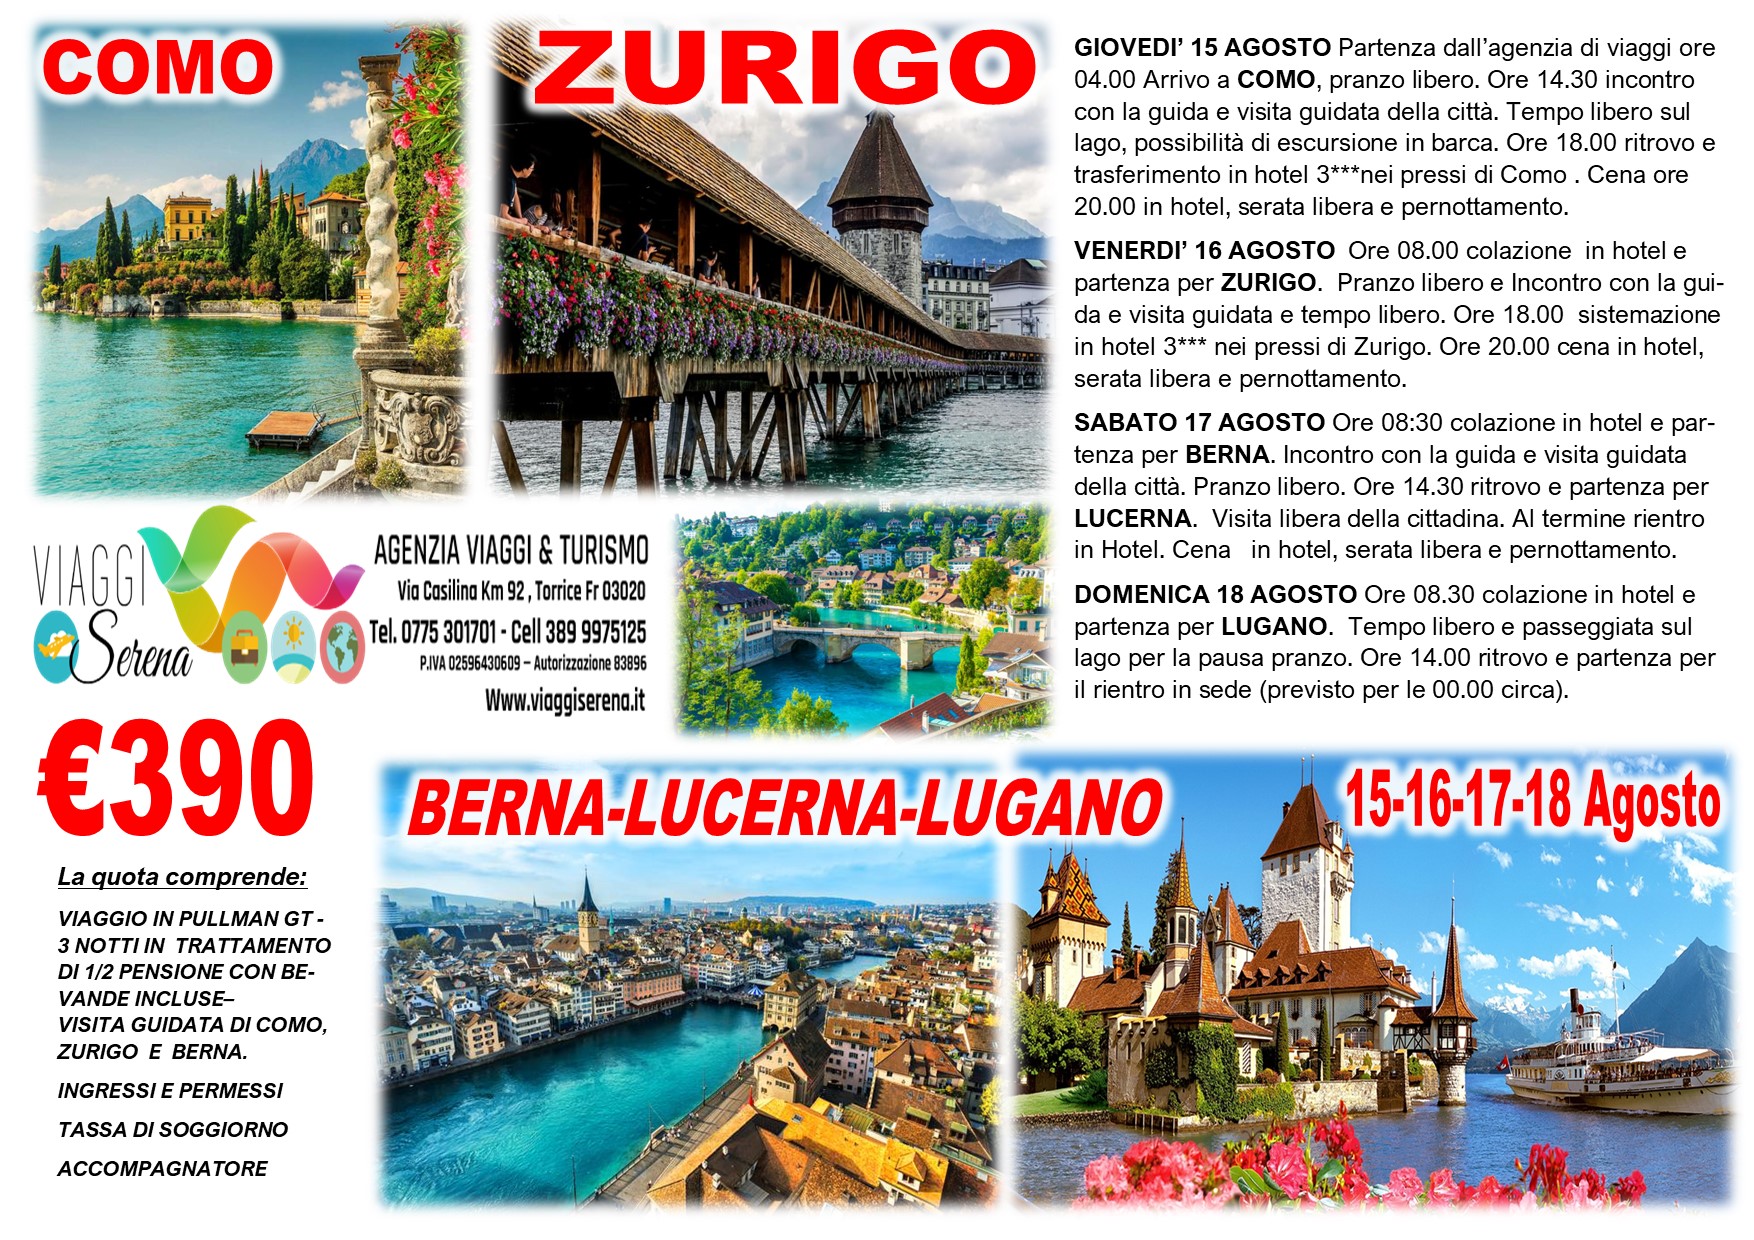 Viaggi di gruppo: Tour Svizzera Zurigo, Lucerna, Berna & Lugano 15-16-17-18 Agosto €390,00